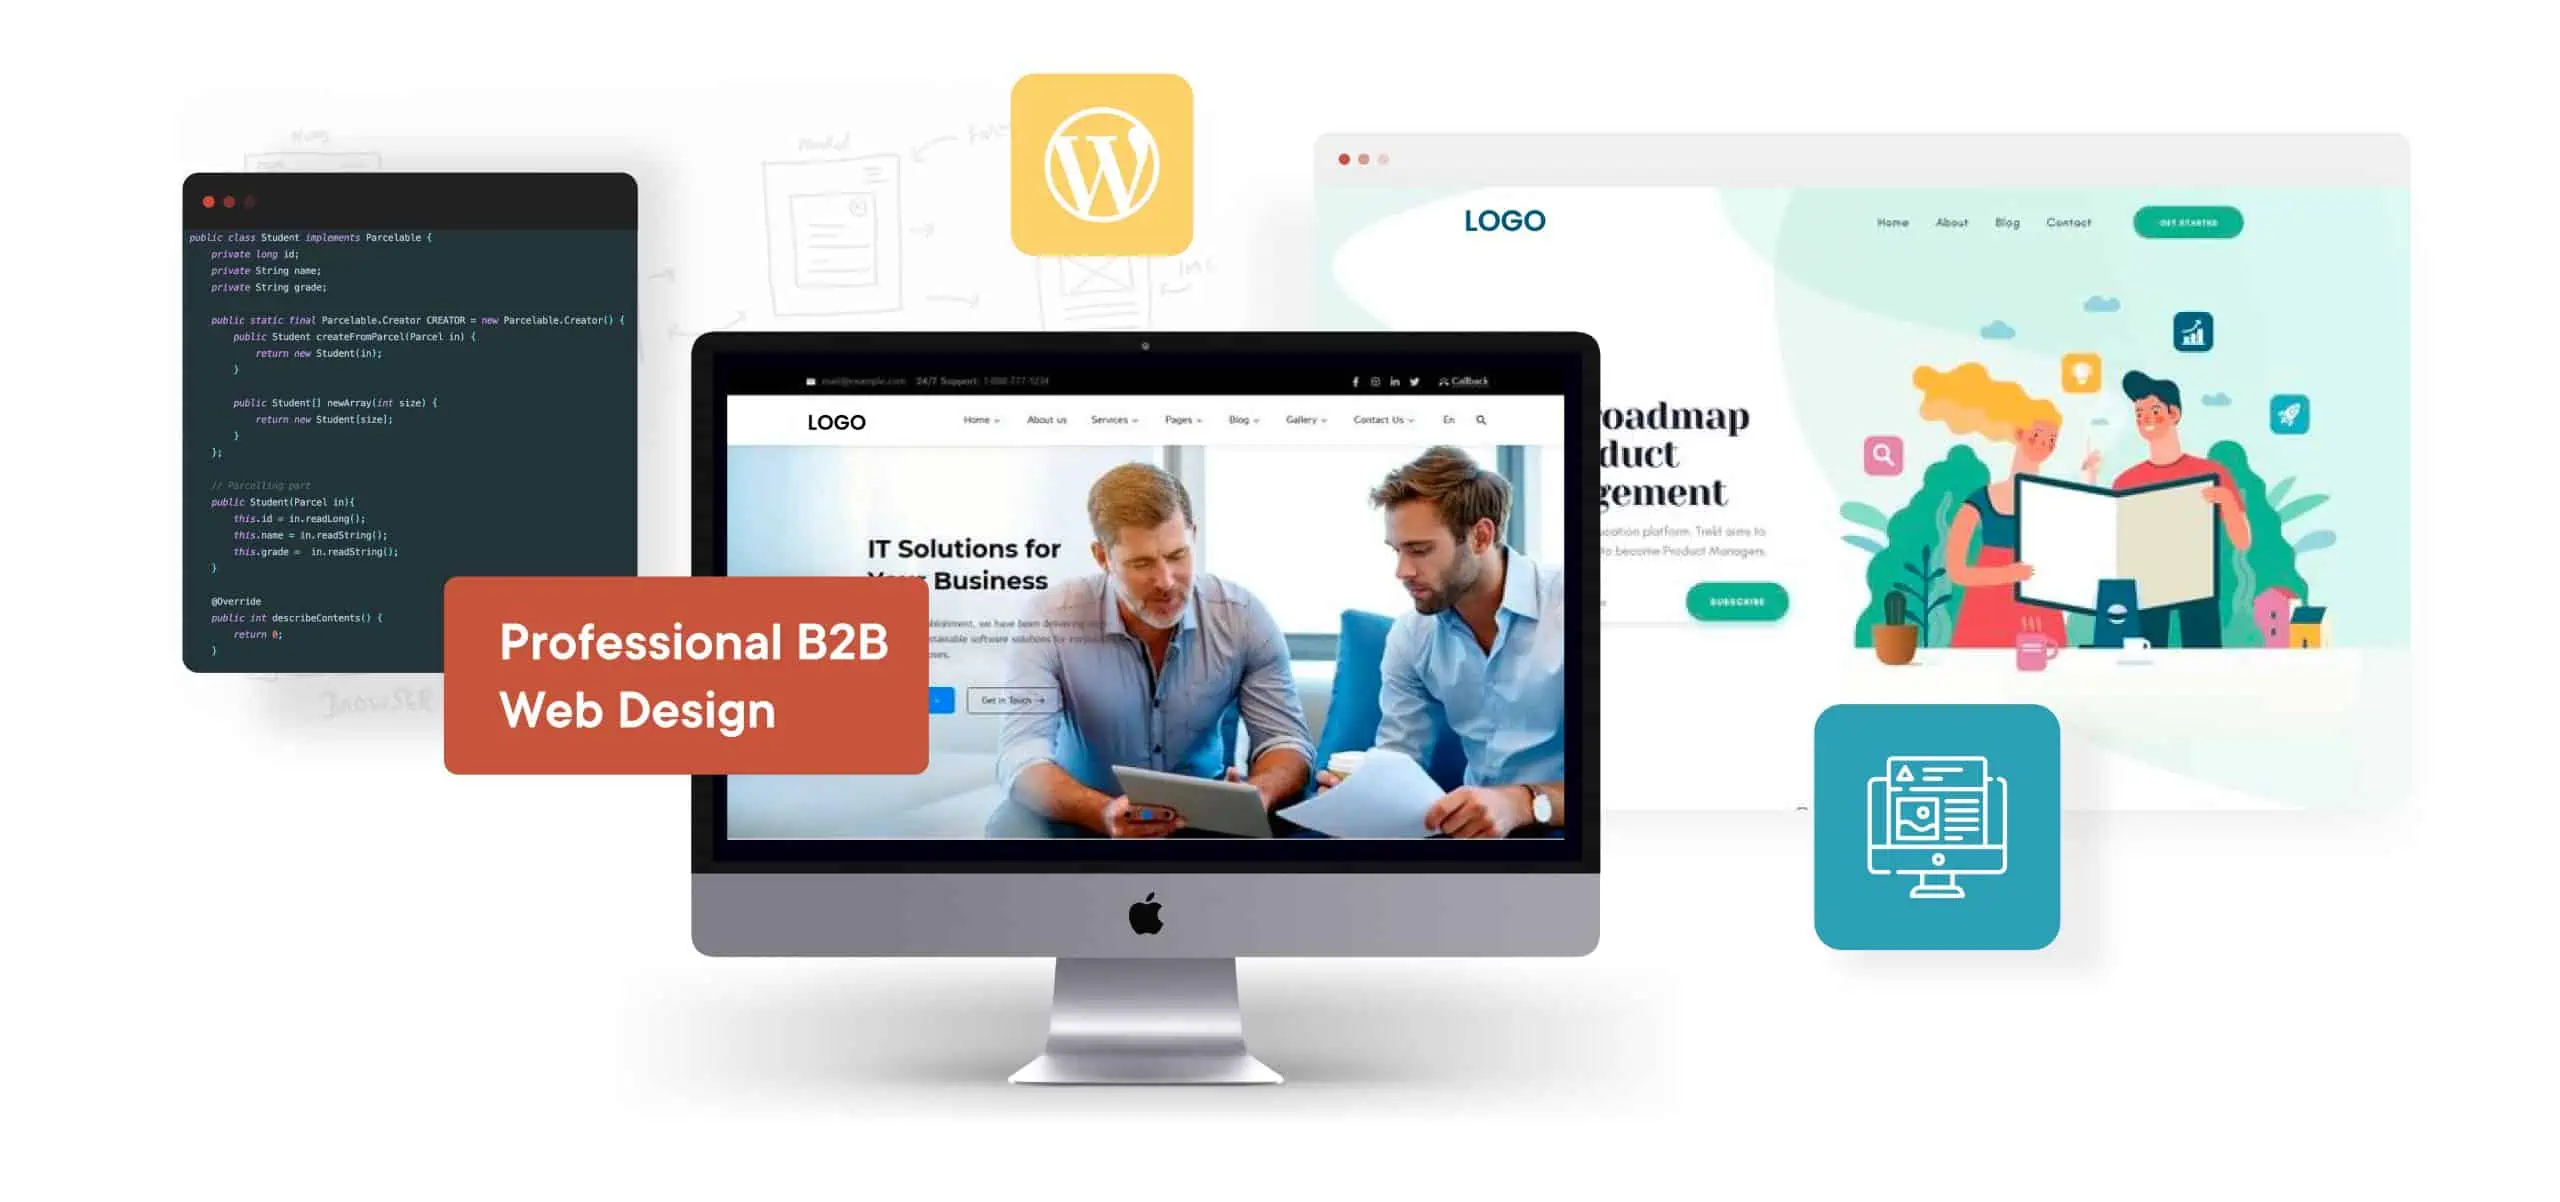 Professional B2B Web Design | WPXStudios